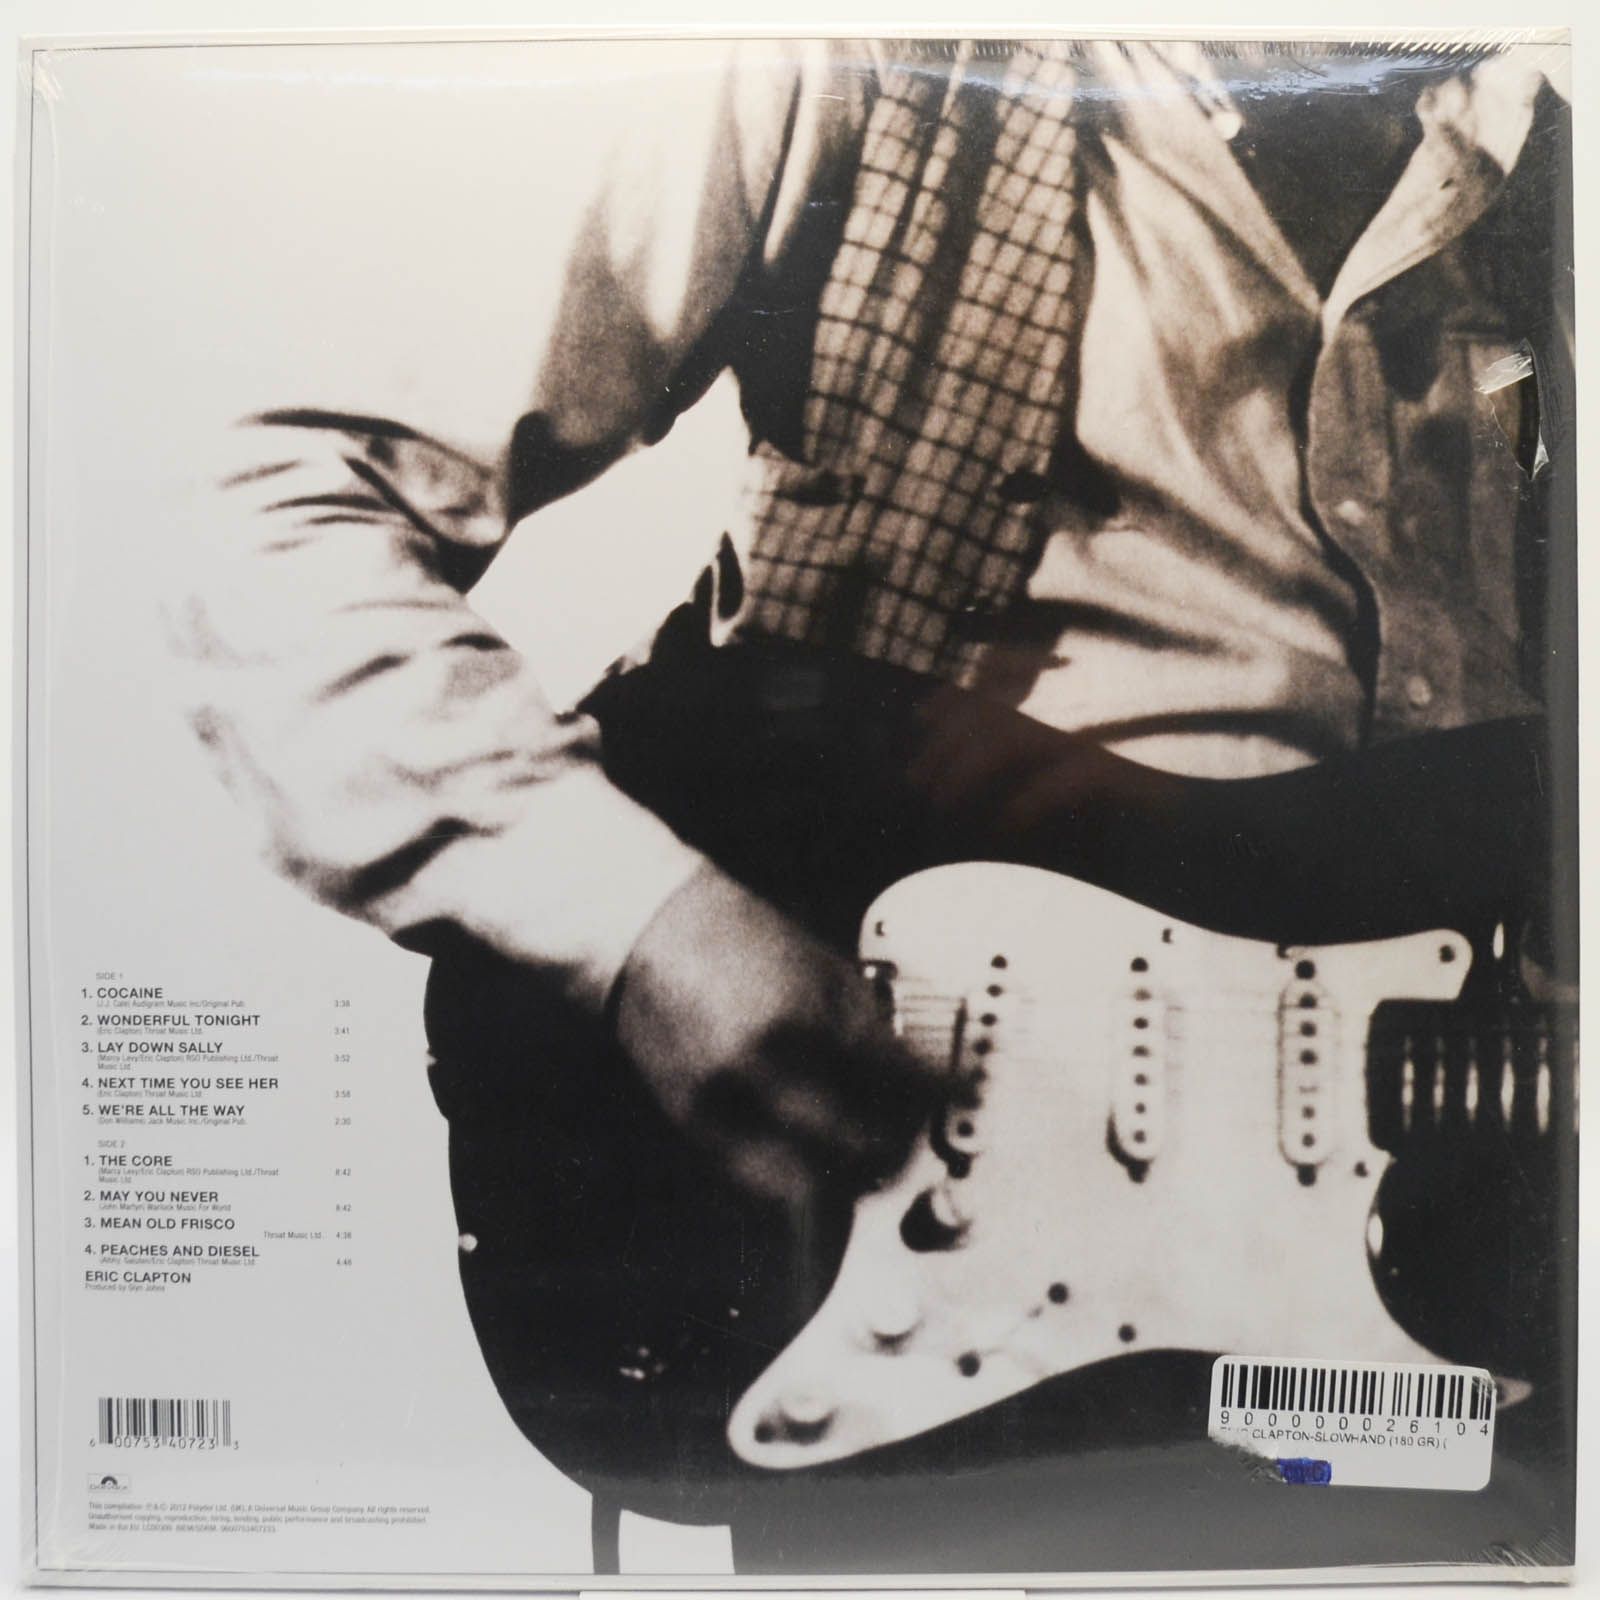 Eric Clapton — Slowhand, 1977